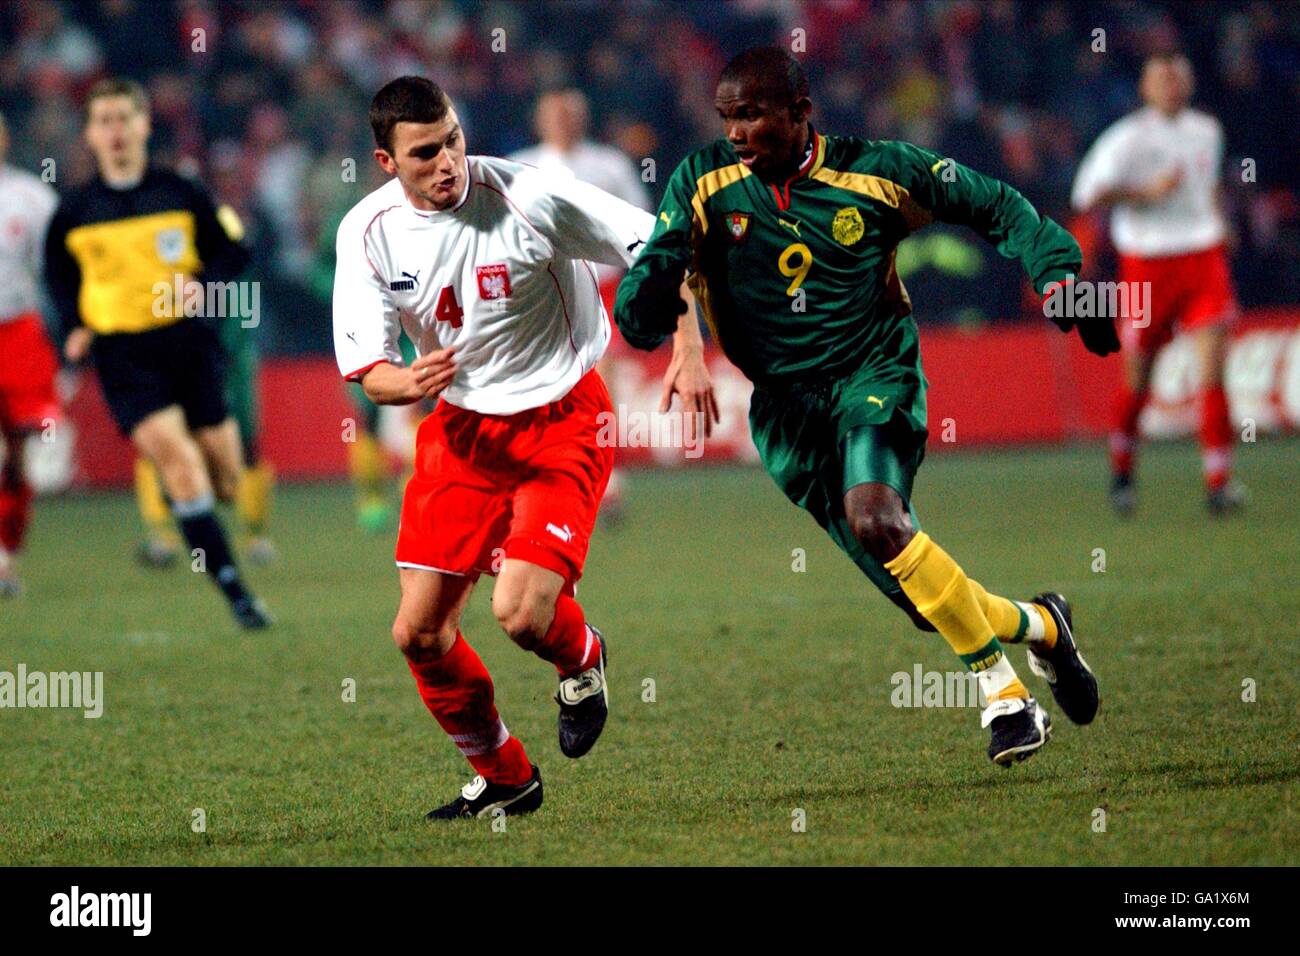 Cameroon's Samuel Eto'o (r) tries to get past Poland's Michal Zewlakow (l) Stock Photo